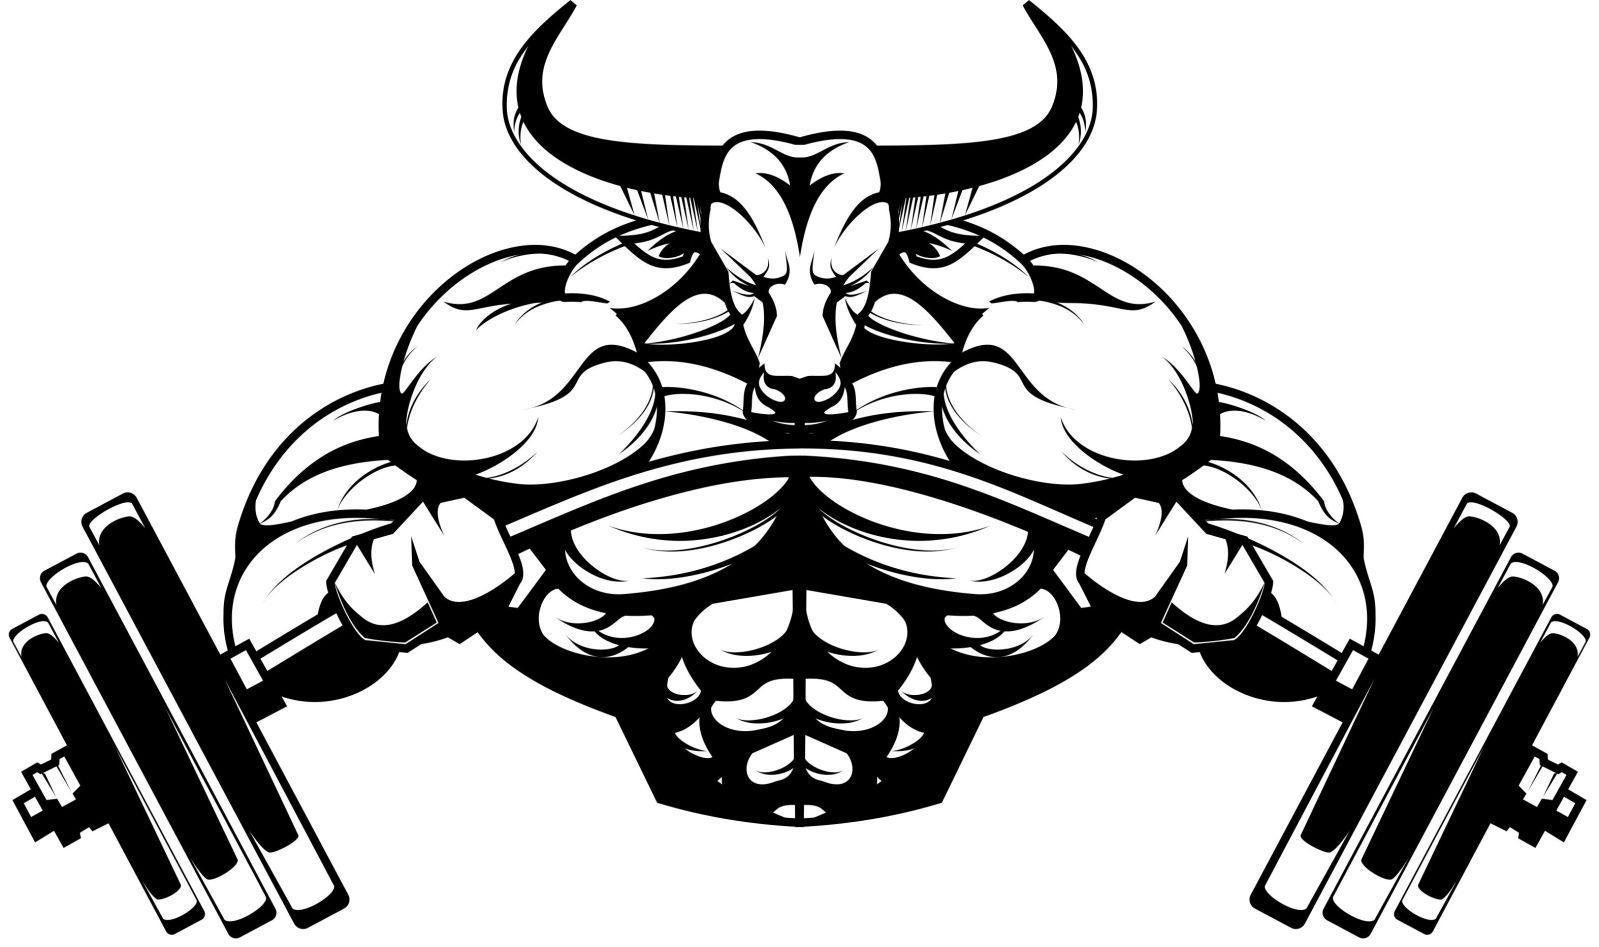 Bodybuilding Logo - Pin by Kamal Singh on Mr.Singh in 2019 | Bodybuilding logo ...